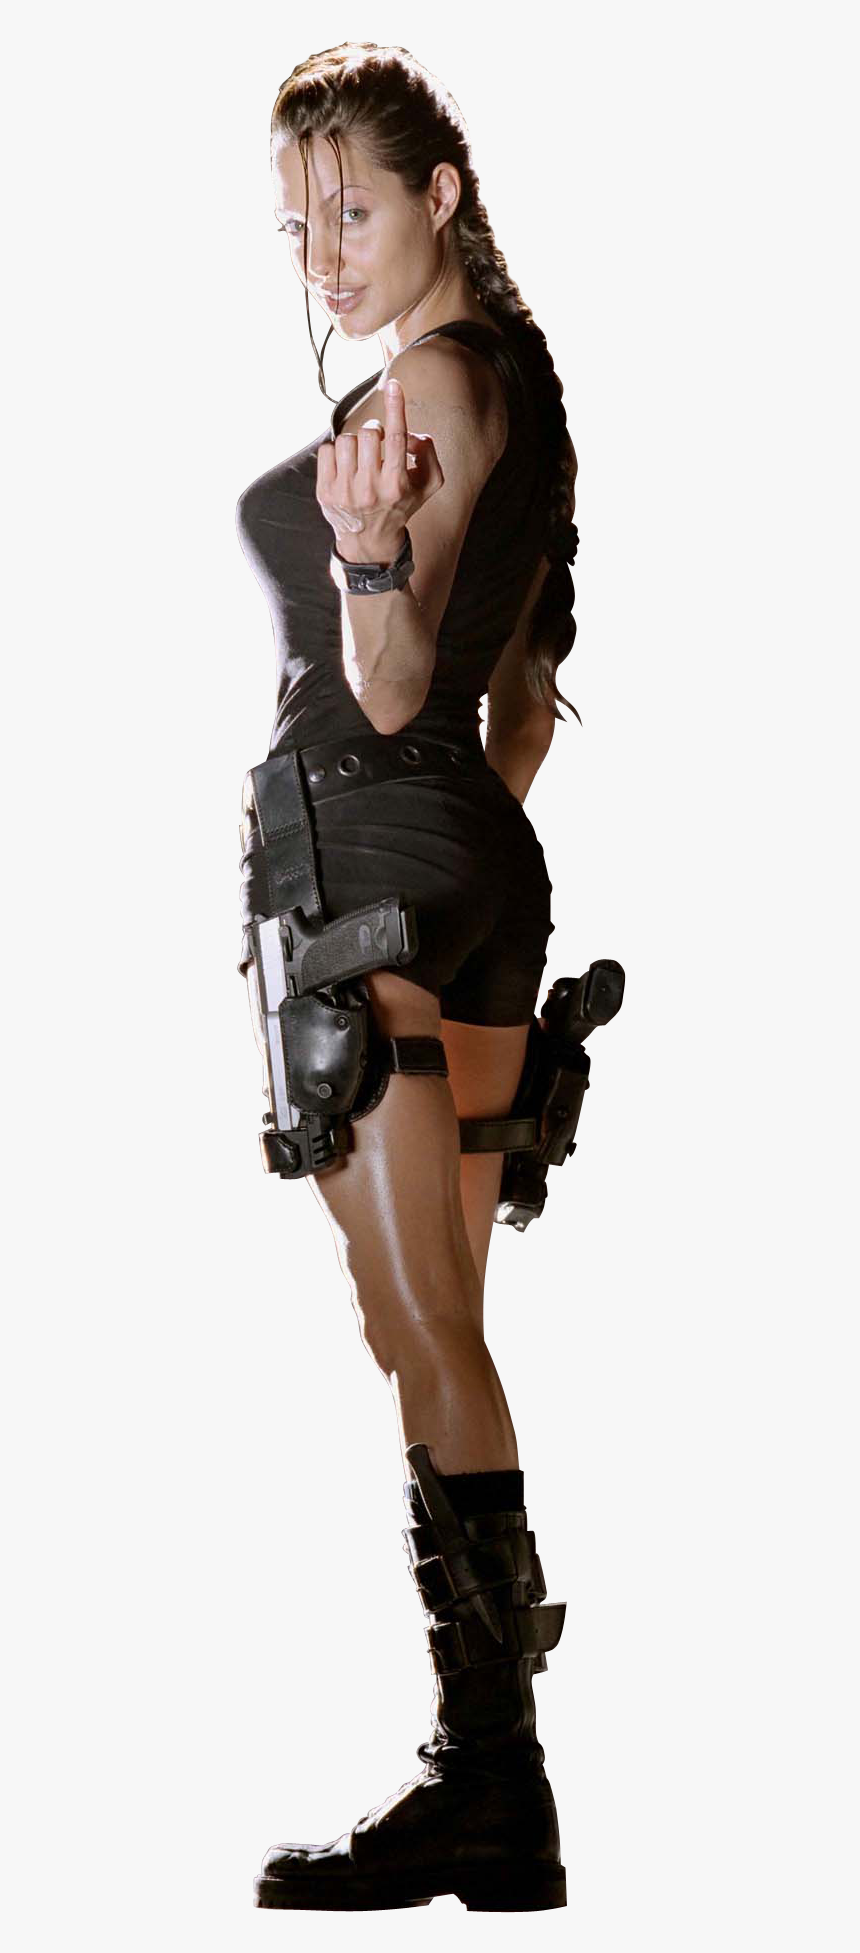 Tomb Raider Logo Png, Transparent Png, Free Download